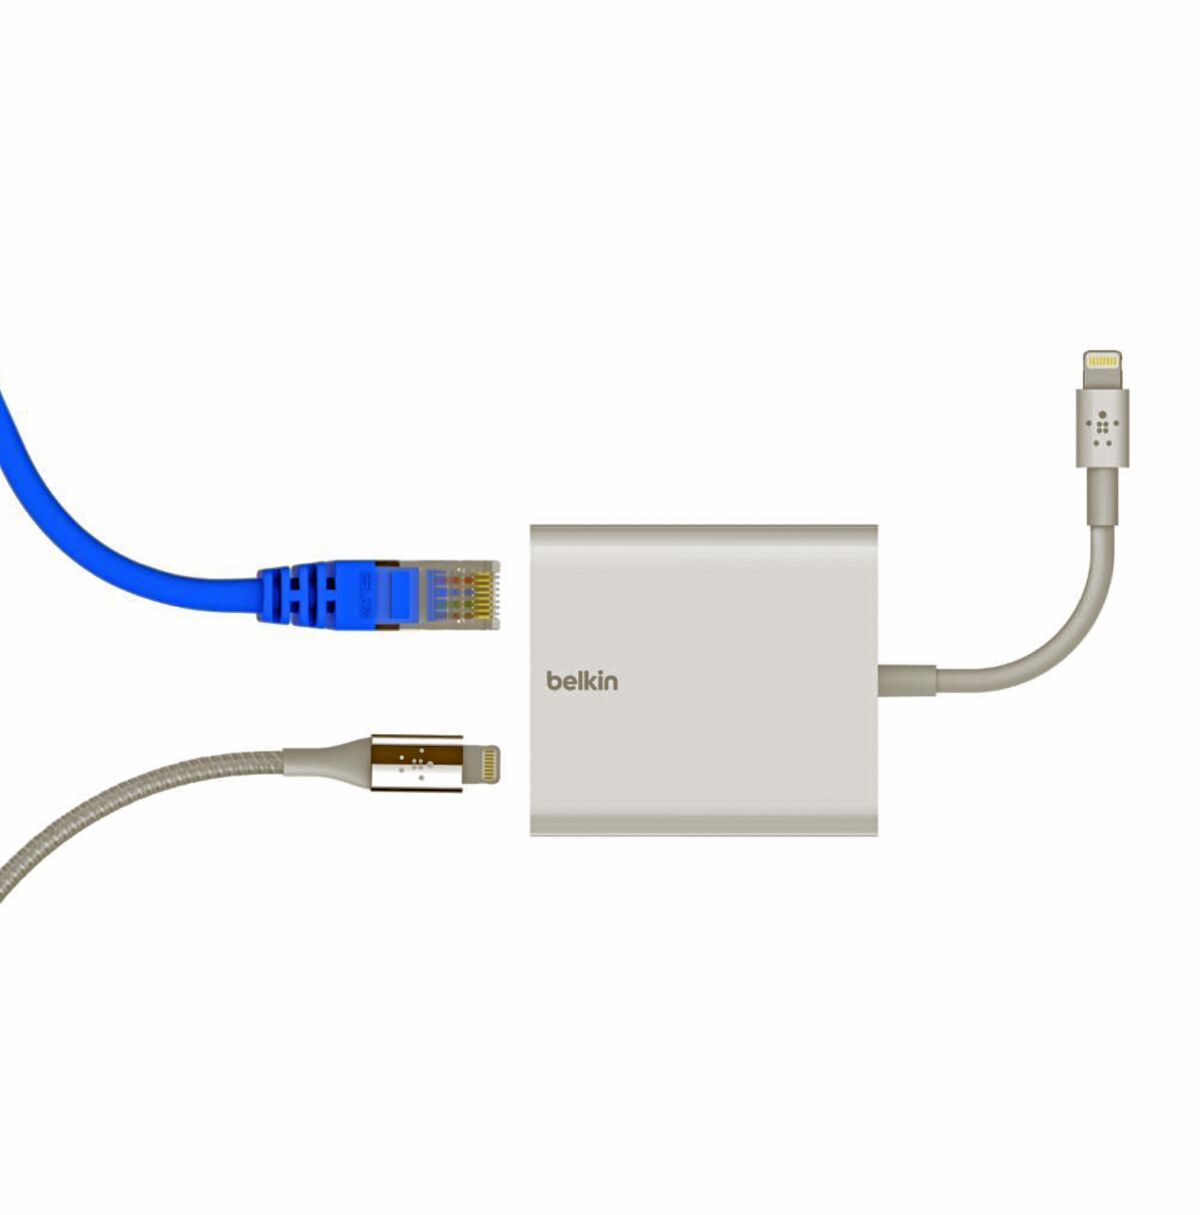 Belkin Ethernet adapter has a Lightning connector 